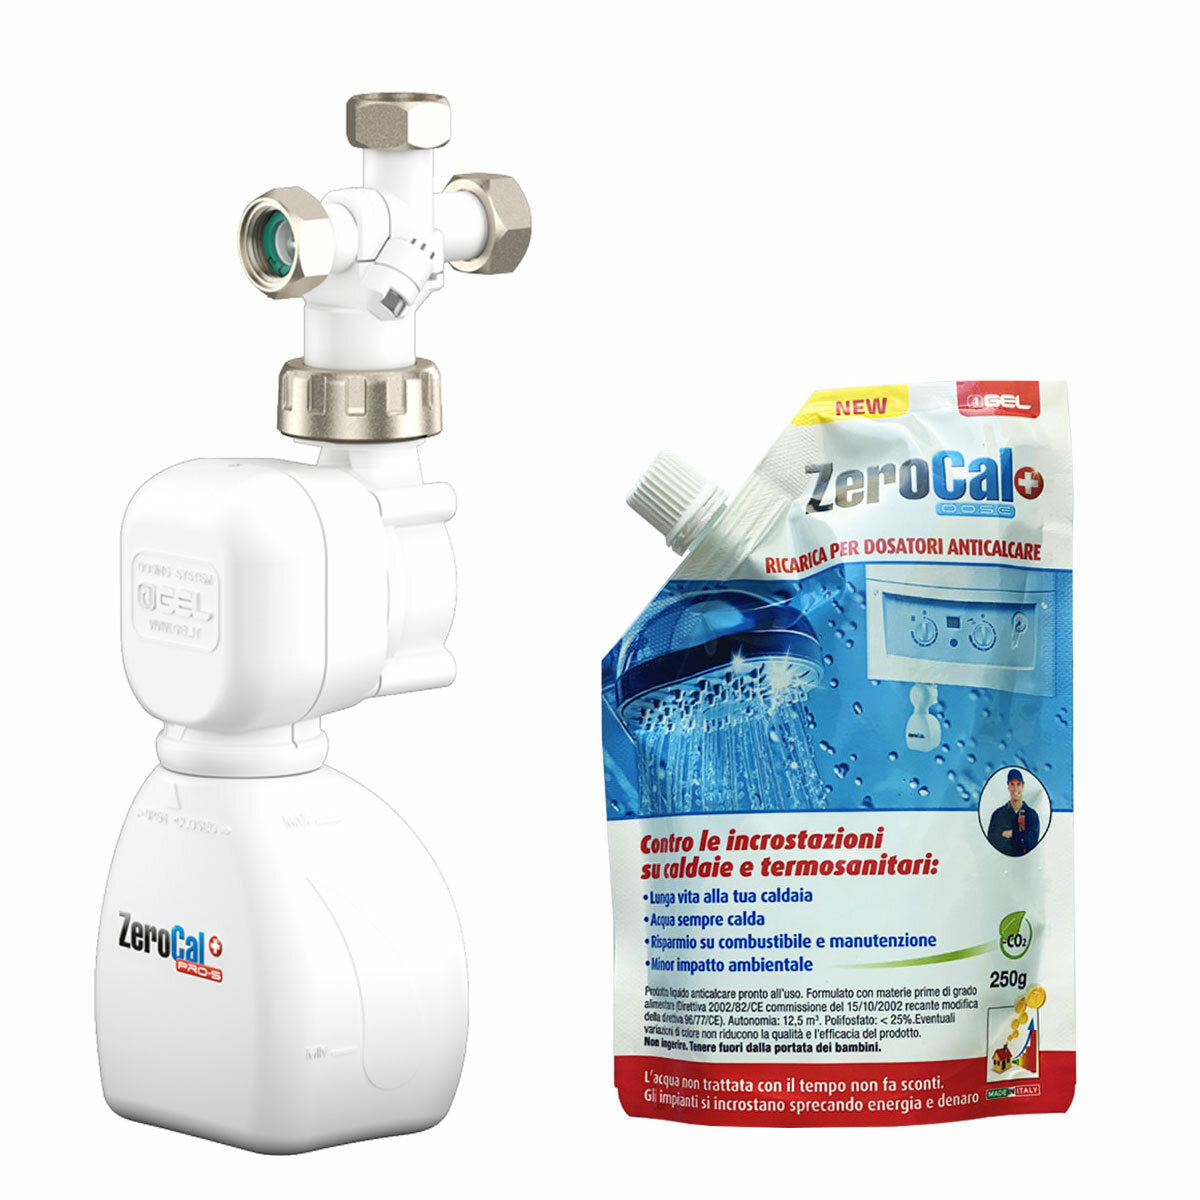 Anti-limescale dispenser Gel Zerocal+ PRO S DIMA DUAL Universal 1/2" for boiler